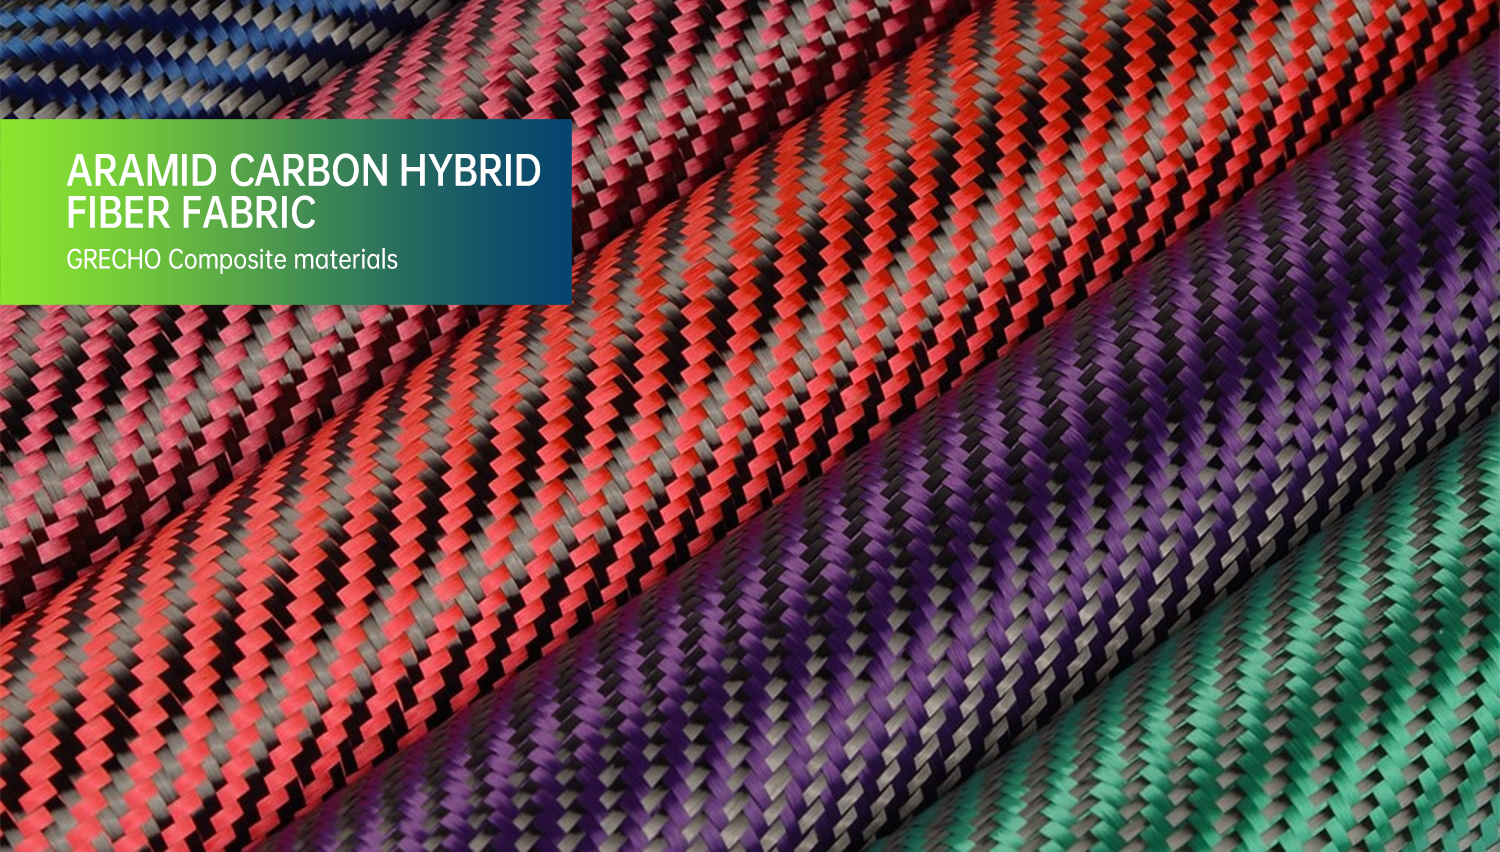 Aramid Carbon Hybrid Fiber Fabric